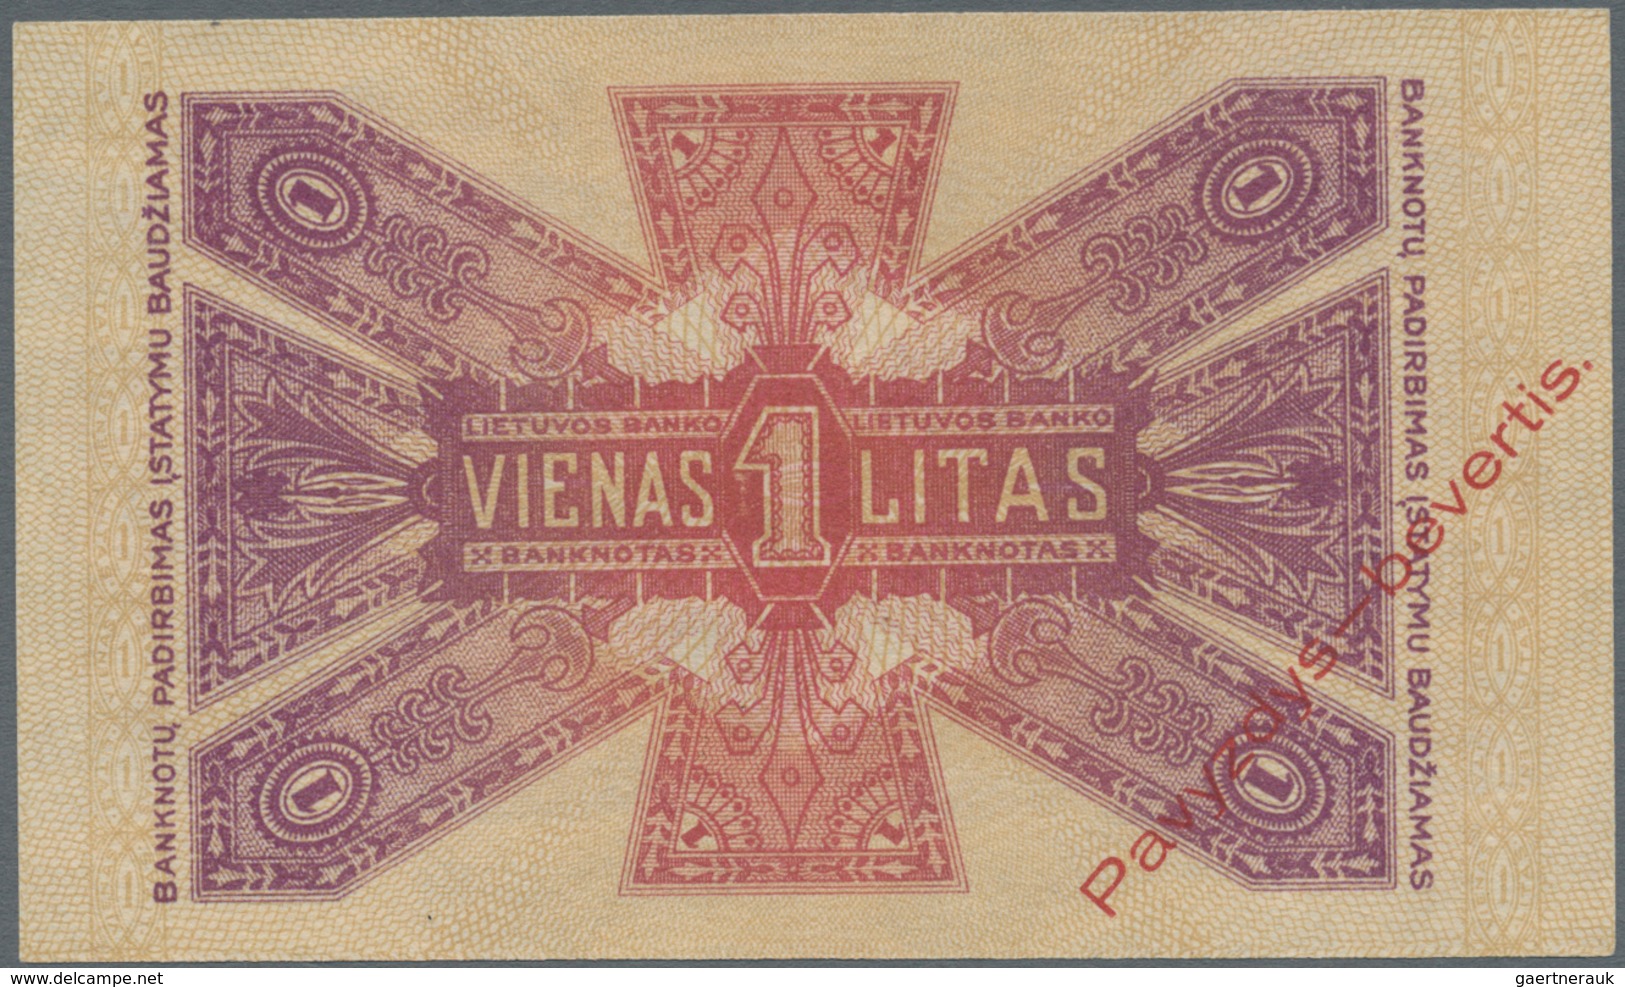 Lithuania / Litauen: 1 Litas 1922 SPECIMEN With Red Overprint "Pavyzdys - Bevertis", P.13s1 In Perfe - Lituania